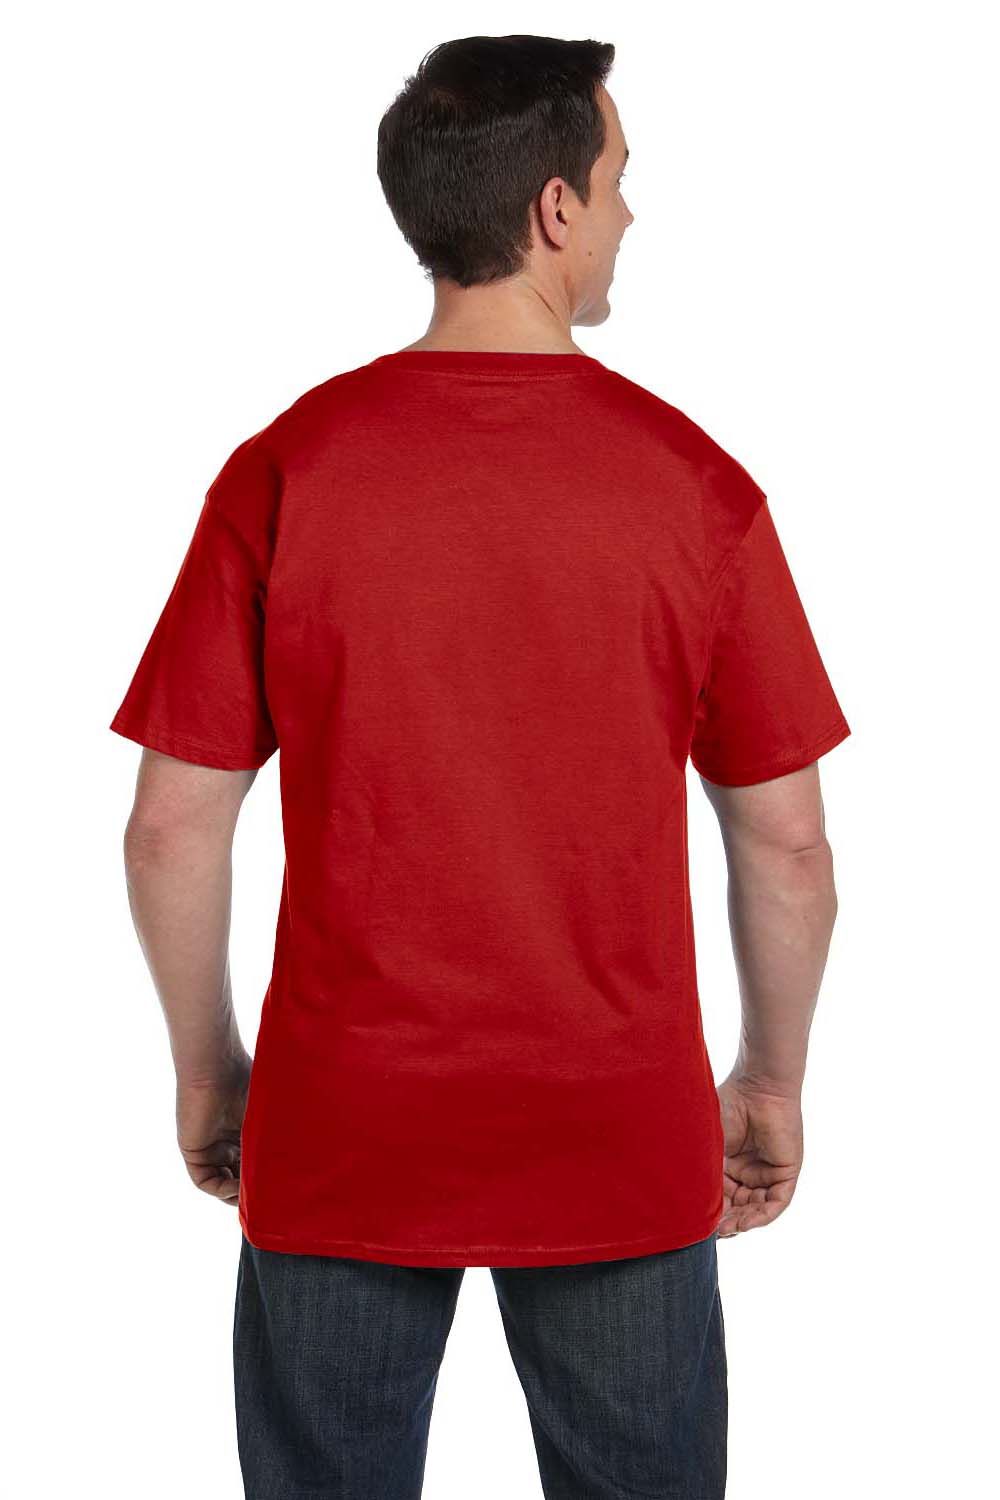 Hanes 5190P Mens Beefy-T Short Sleeve Crewneck T-Shirt w/ Pocket Red Back